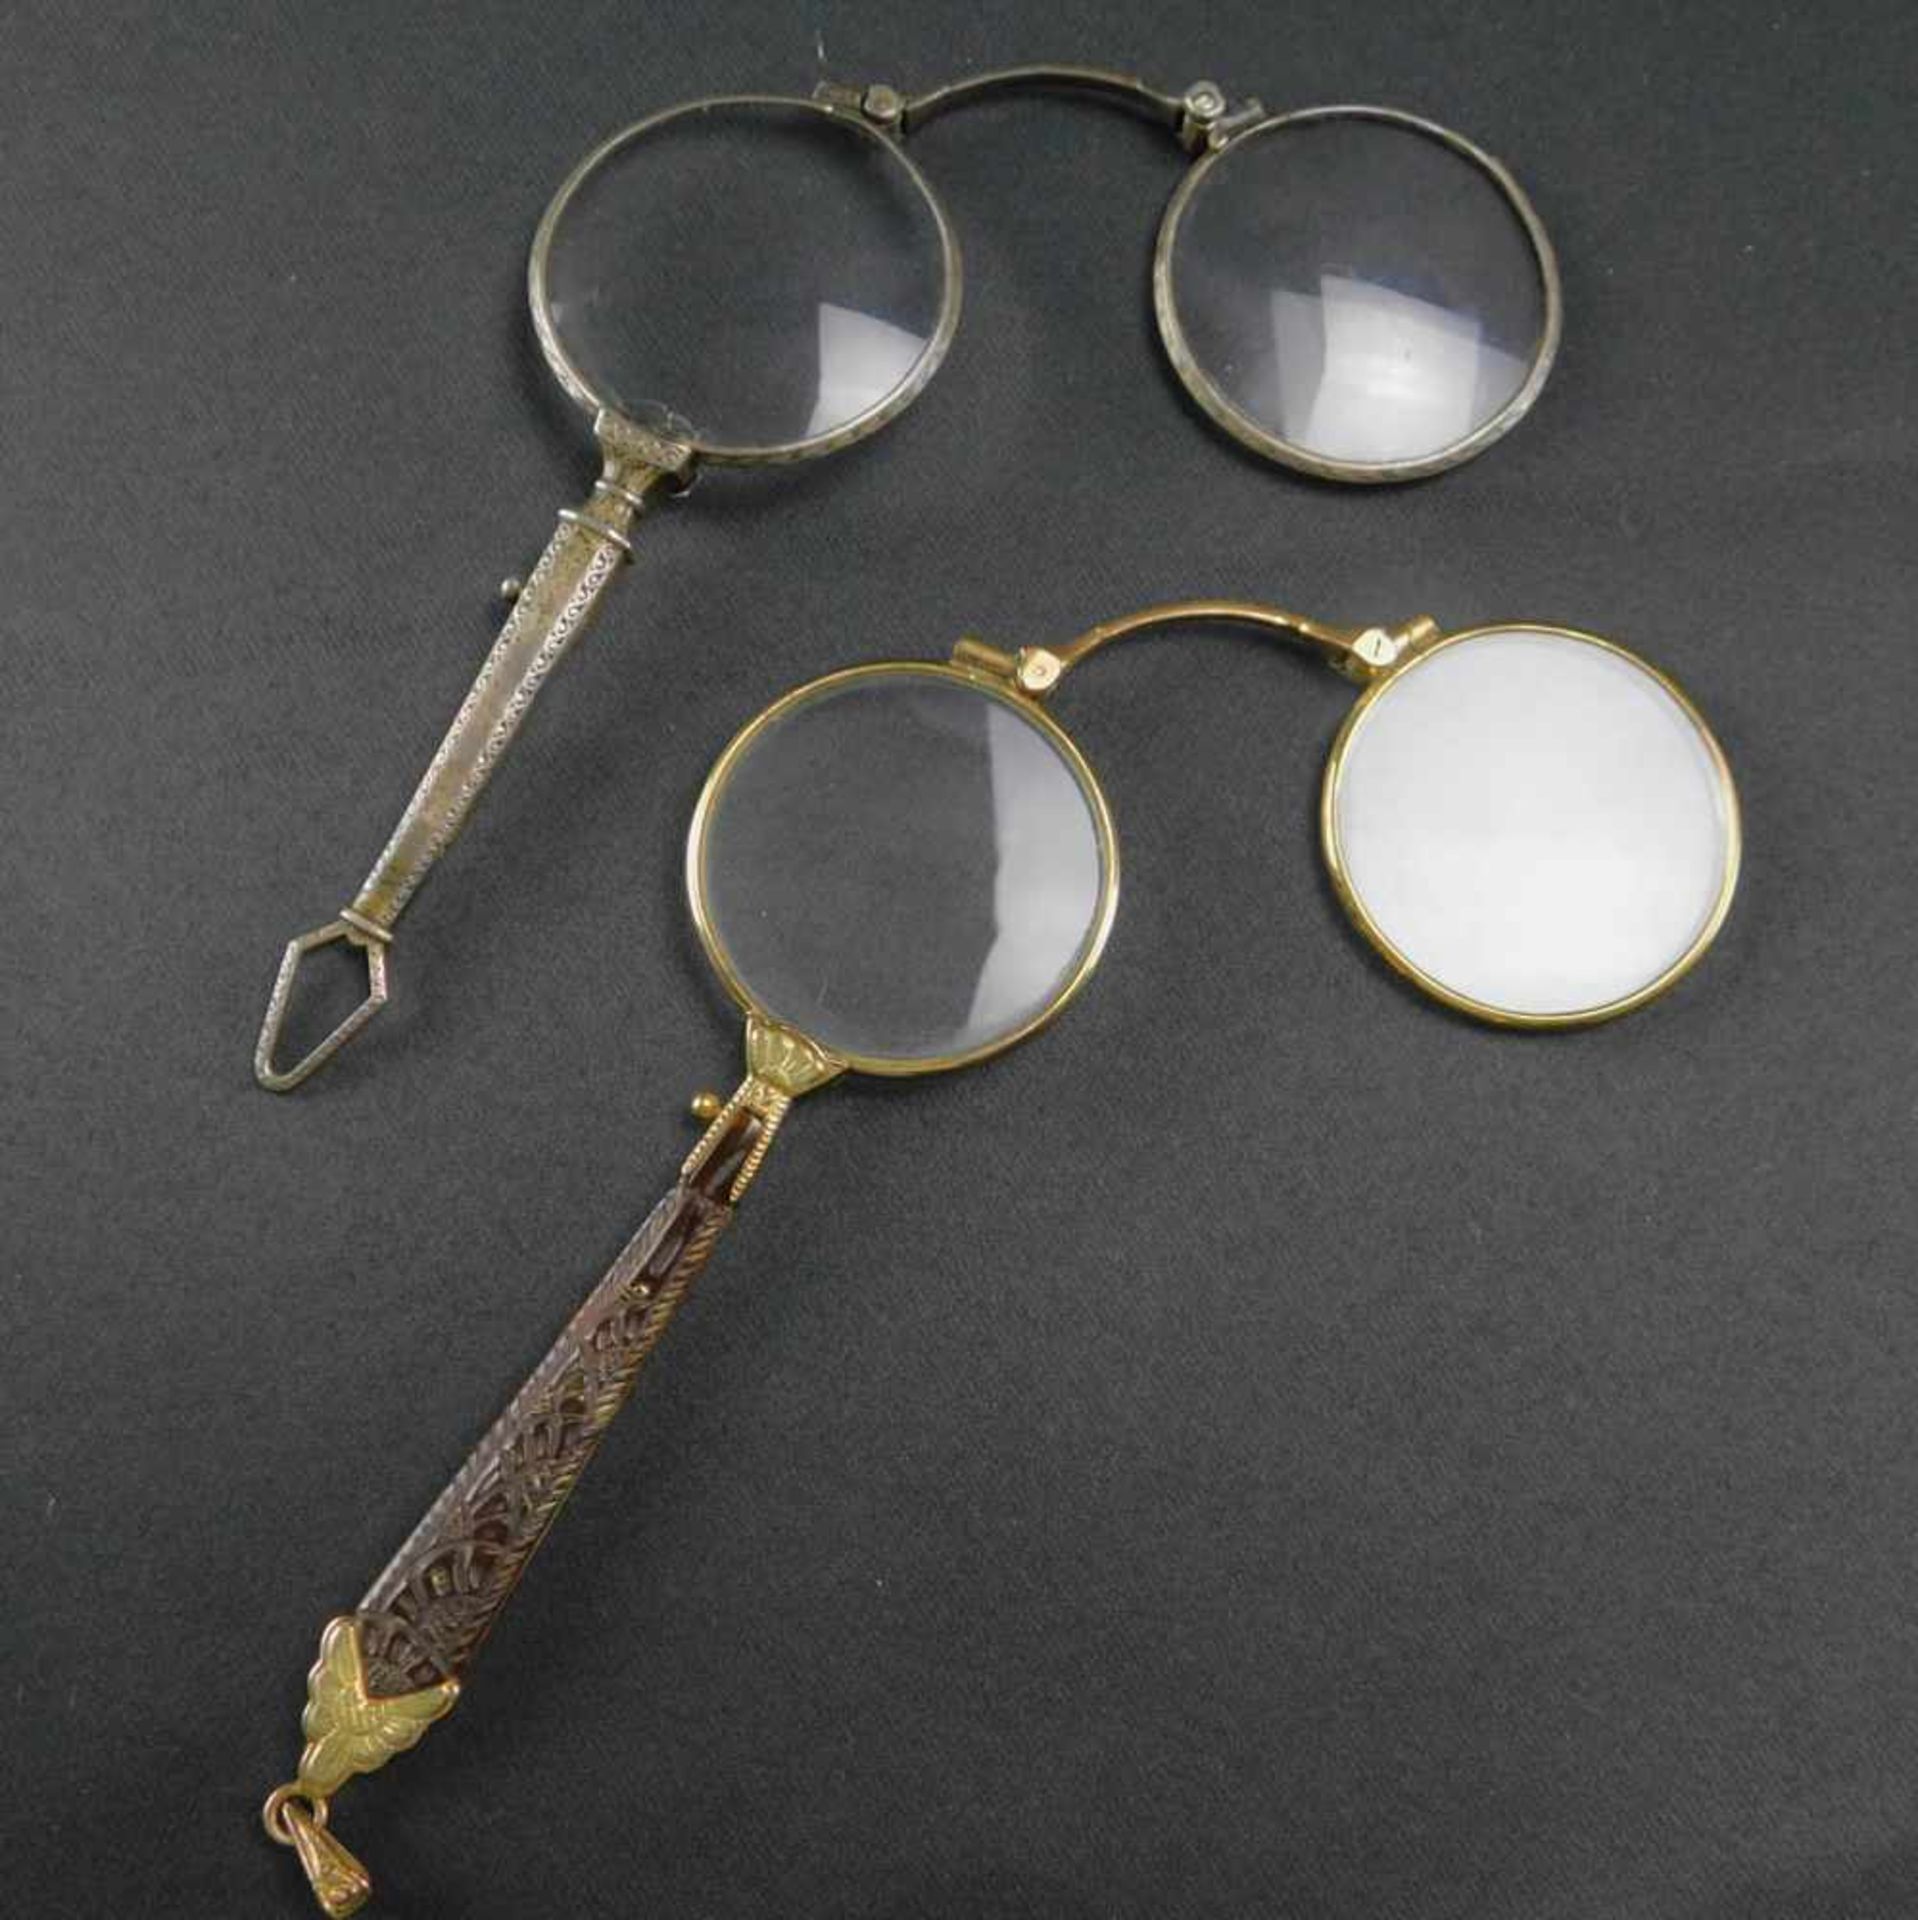 2 Longnons, aufklappbare Brillen, Anfang 20. Jhdt., Länge 11 bis 12 cm